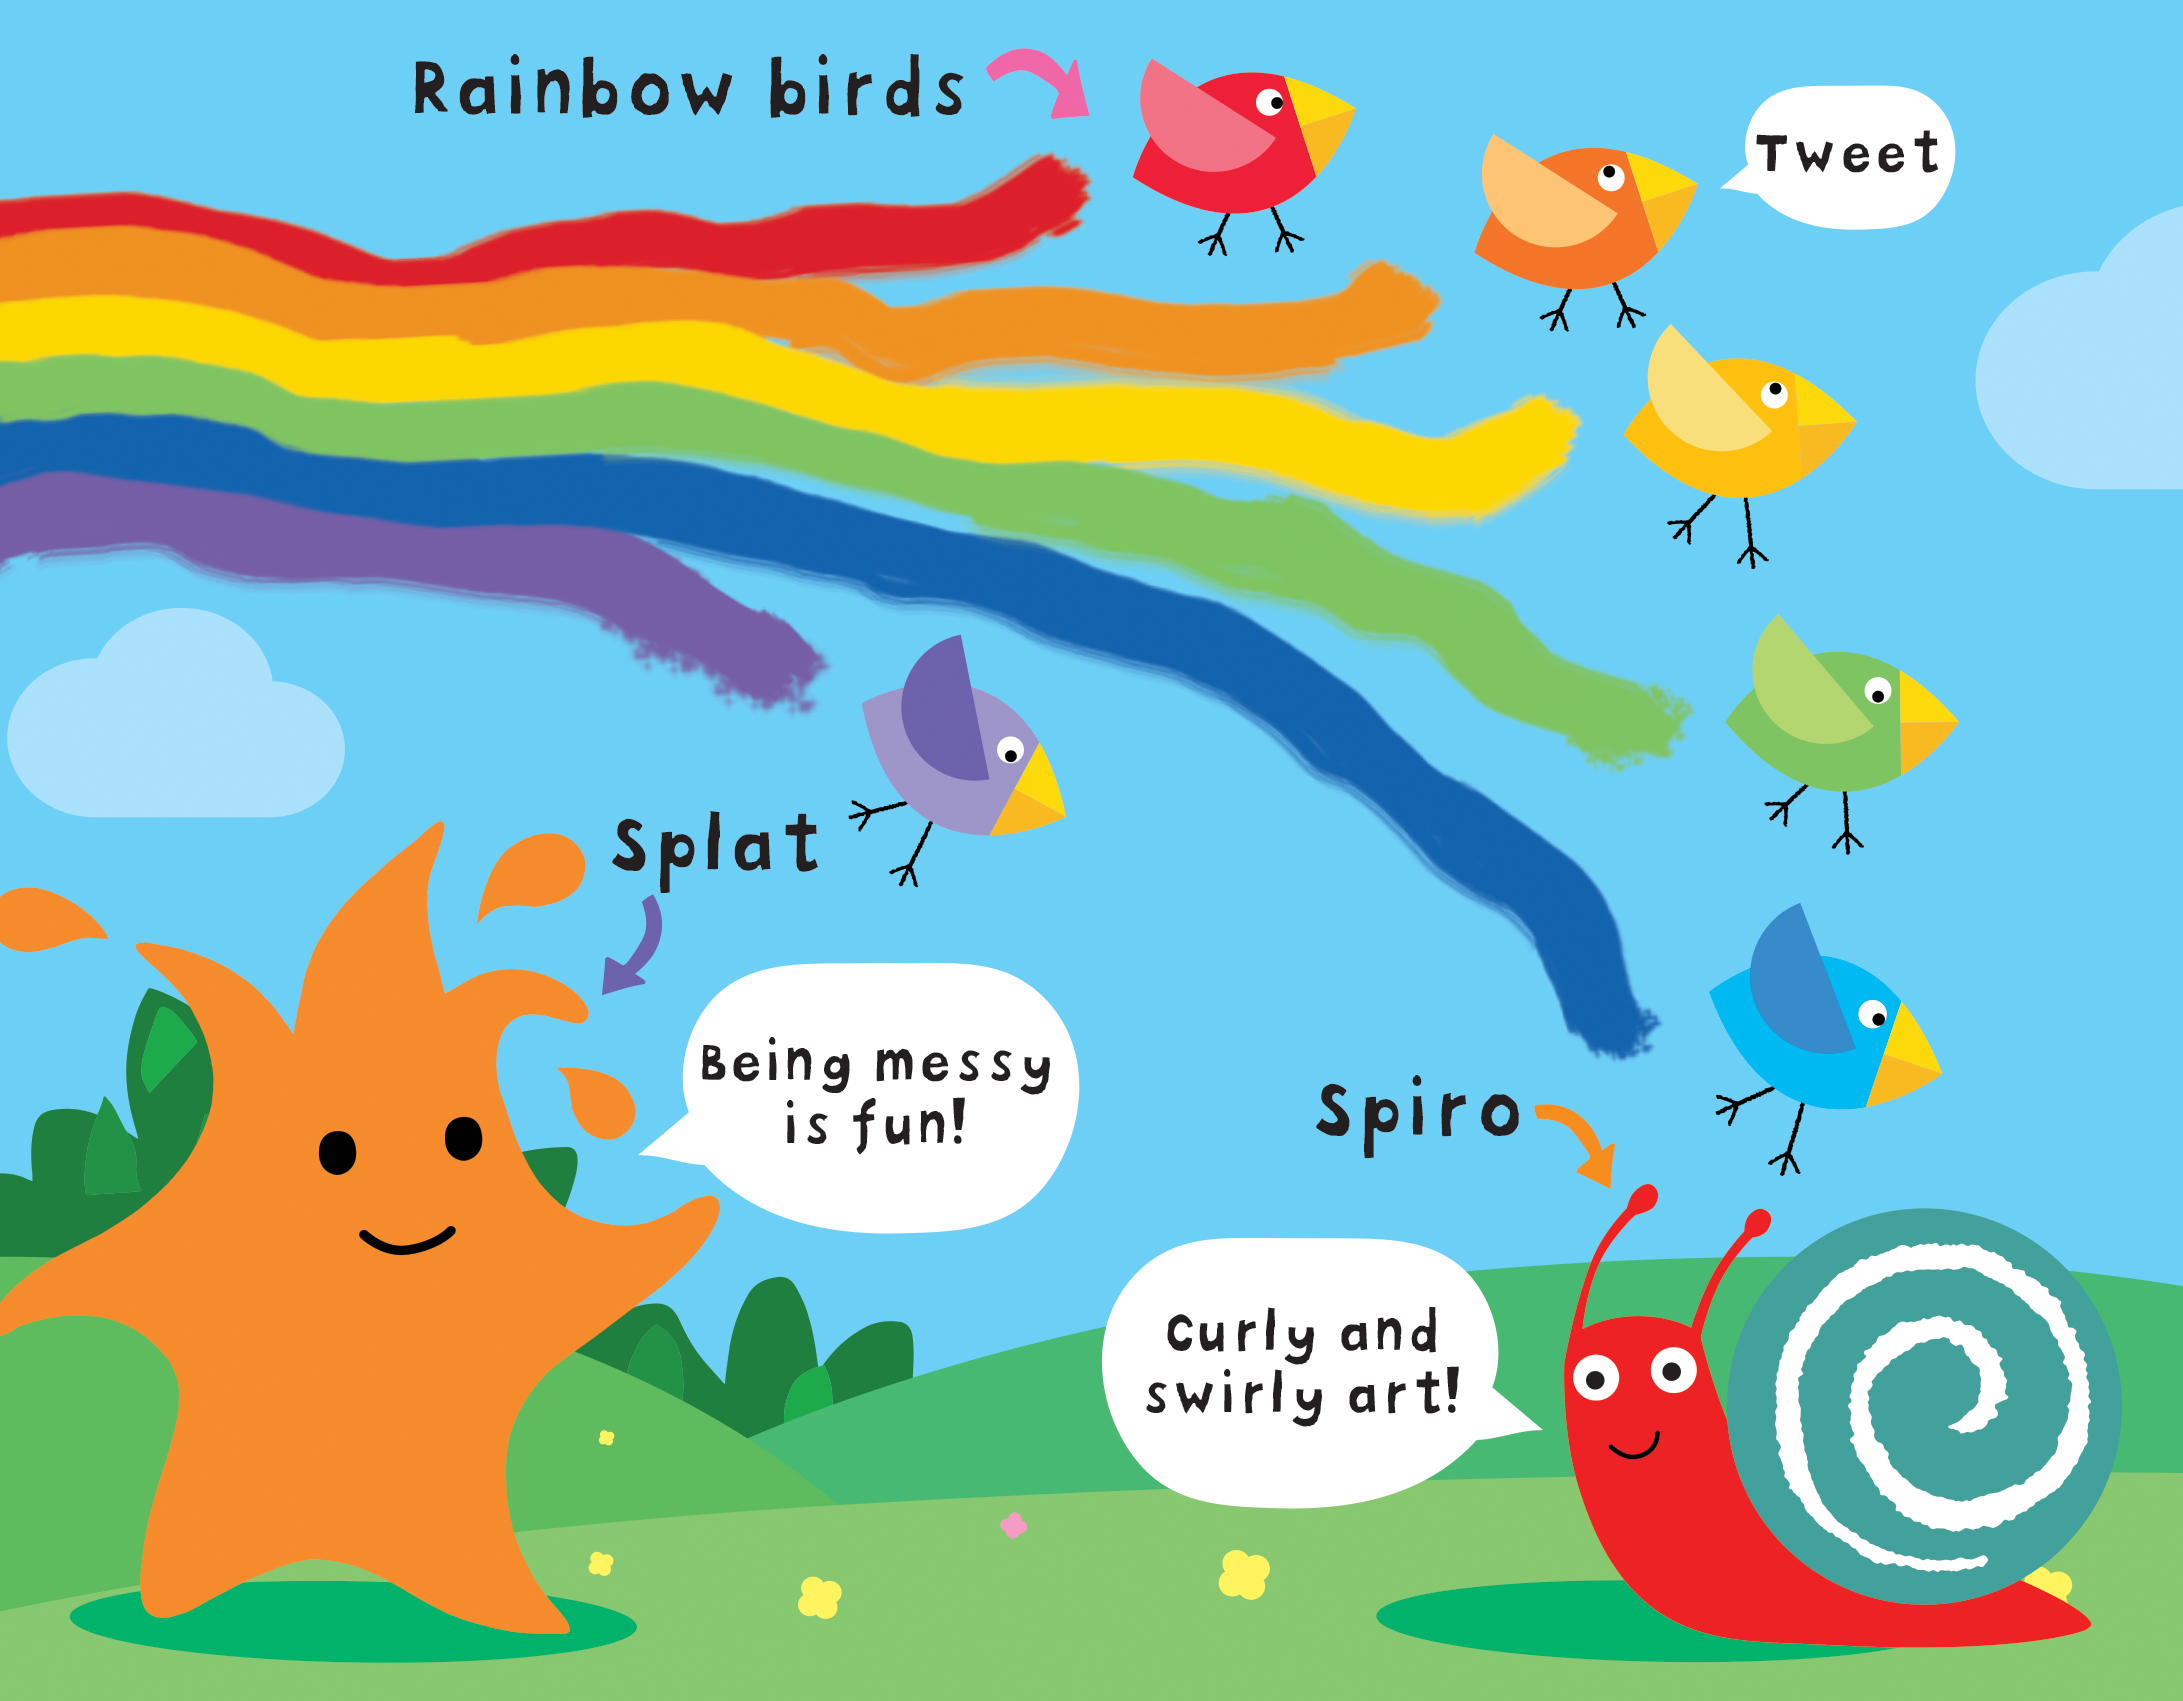 Rainbow birds, Splat and Spiro